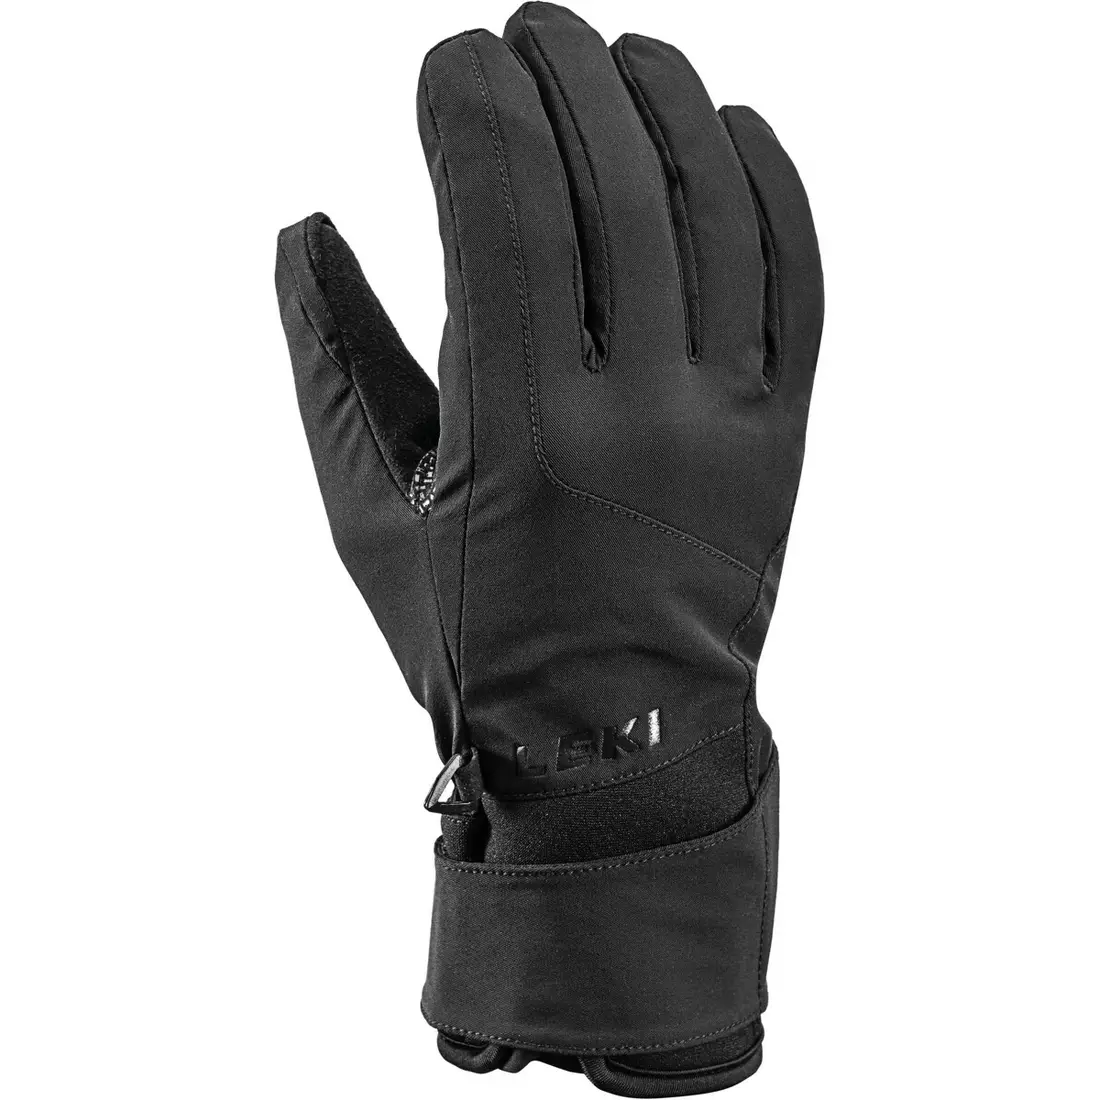 LEKI winter gloves MOVIN black 651806301105